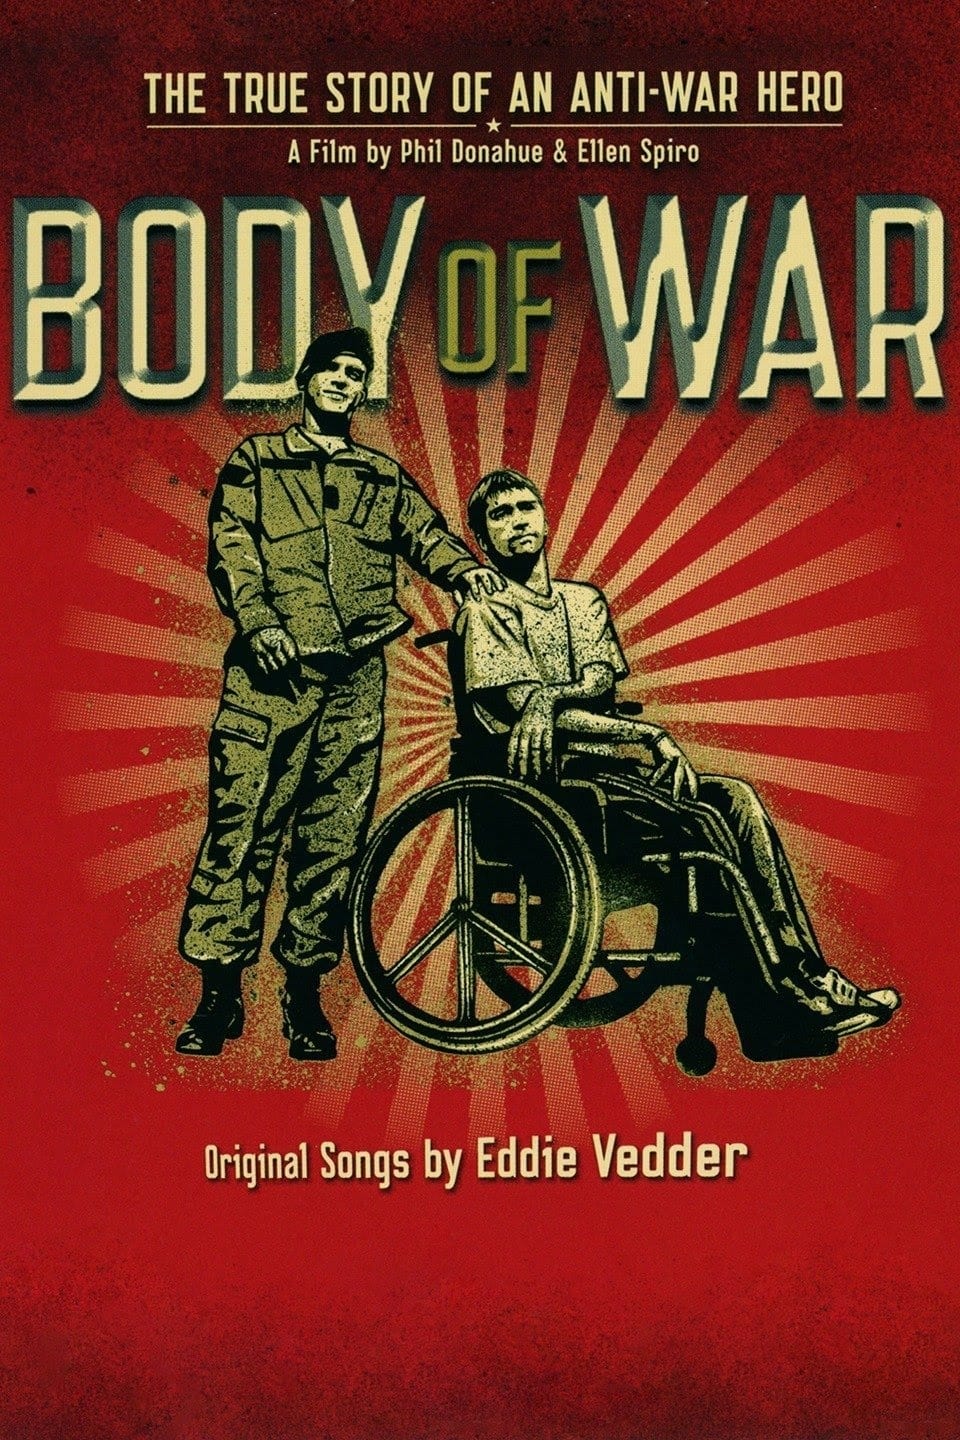 Body of War (2007)